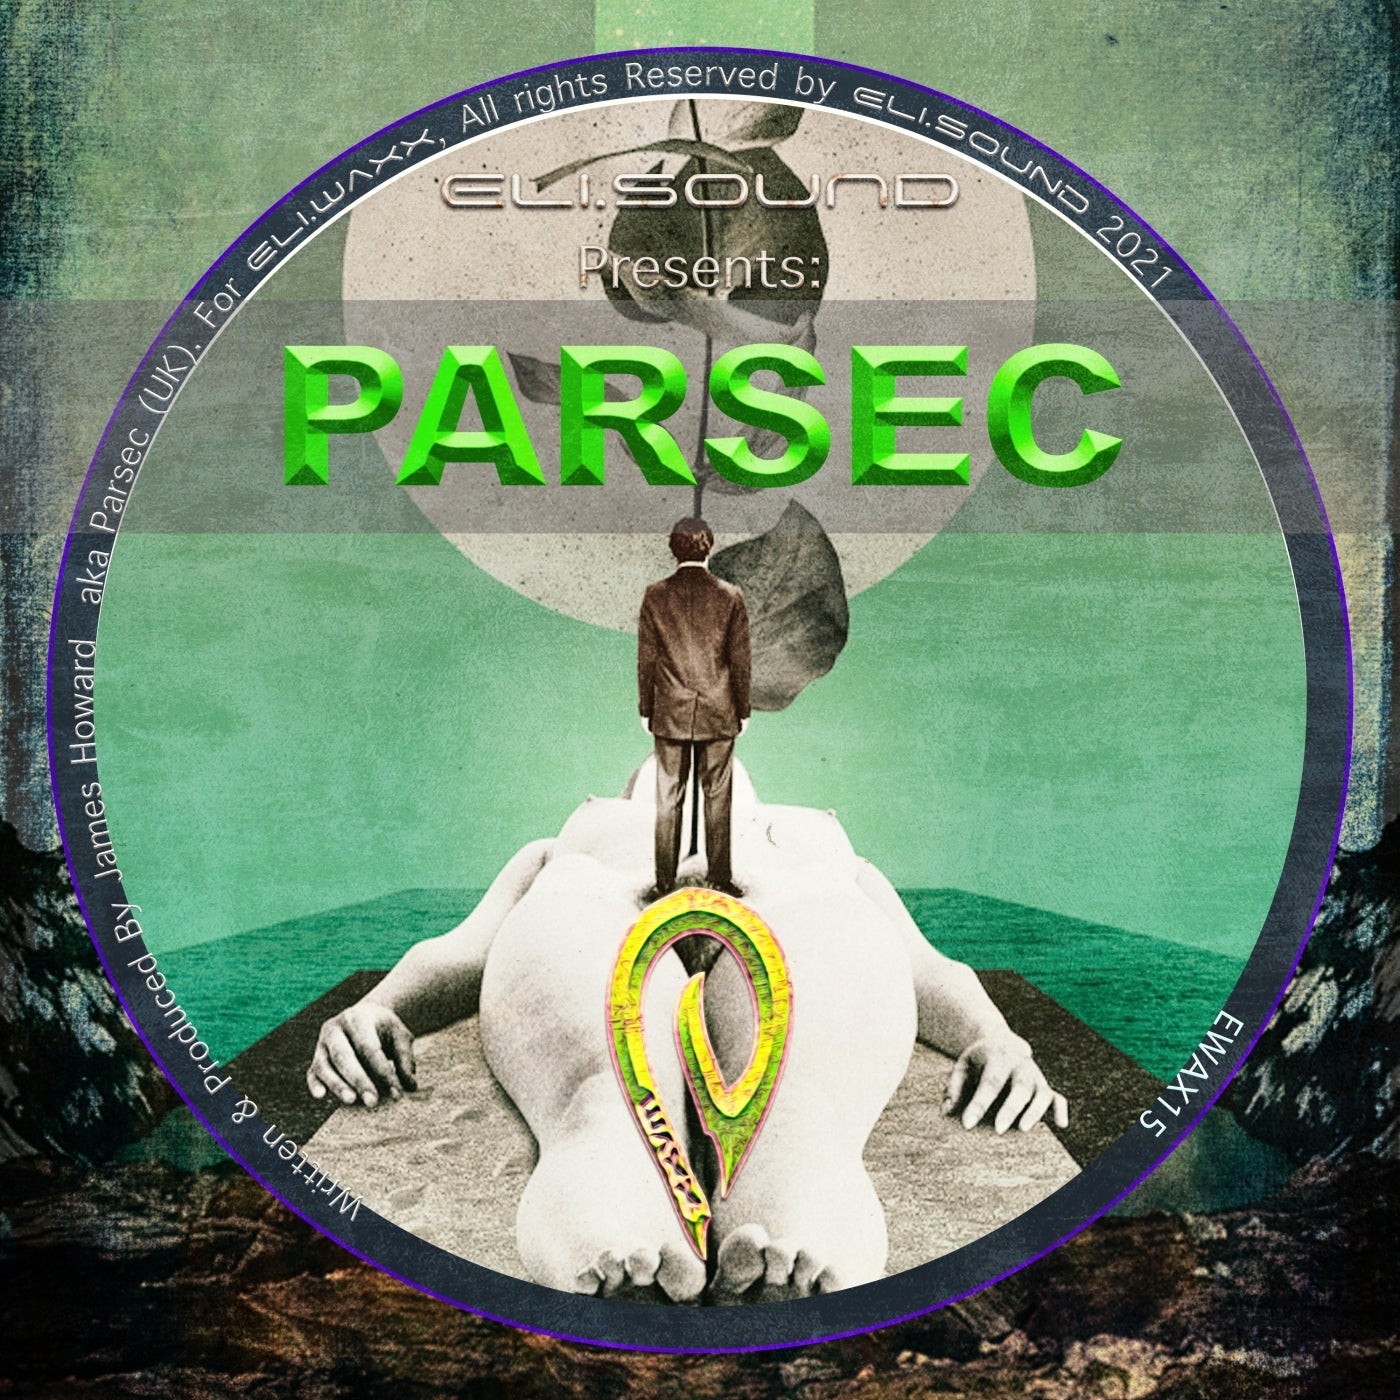 Parsec (UK) – Eli.sound Presents Parsec From UNITED KINGDOM [EWAX15]